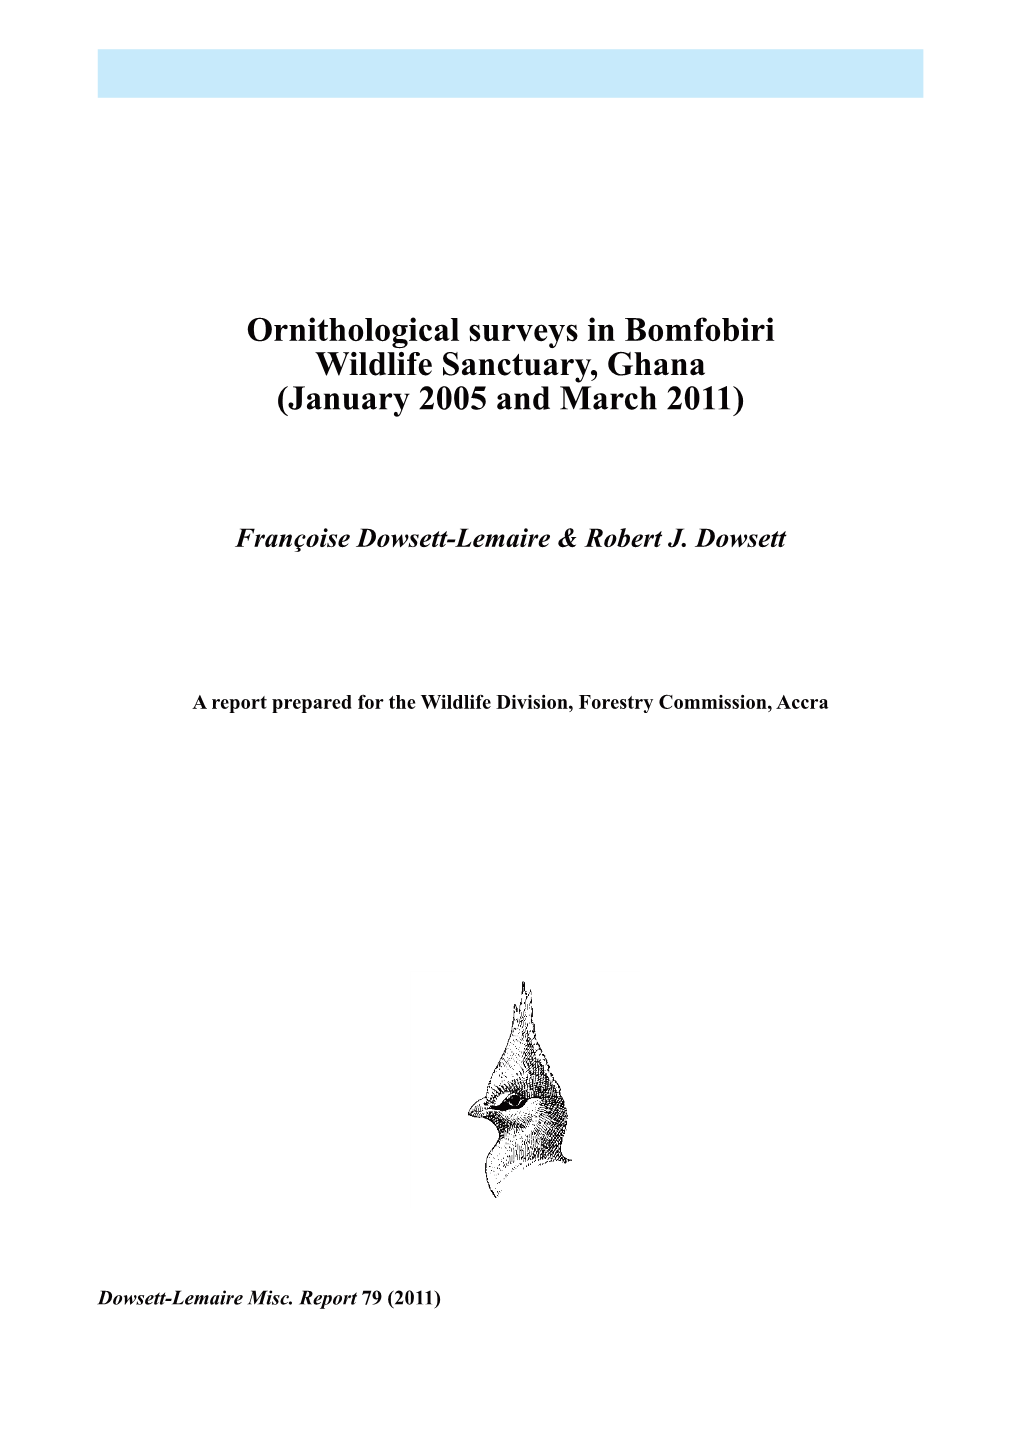 Ornithological Surveys in Bomfobiri Wildlife Sanctuary, Ghana (January 2005 and March 2011)